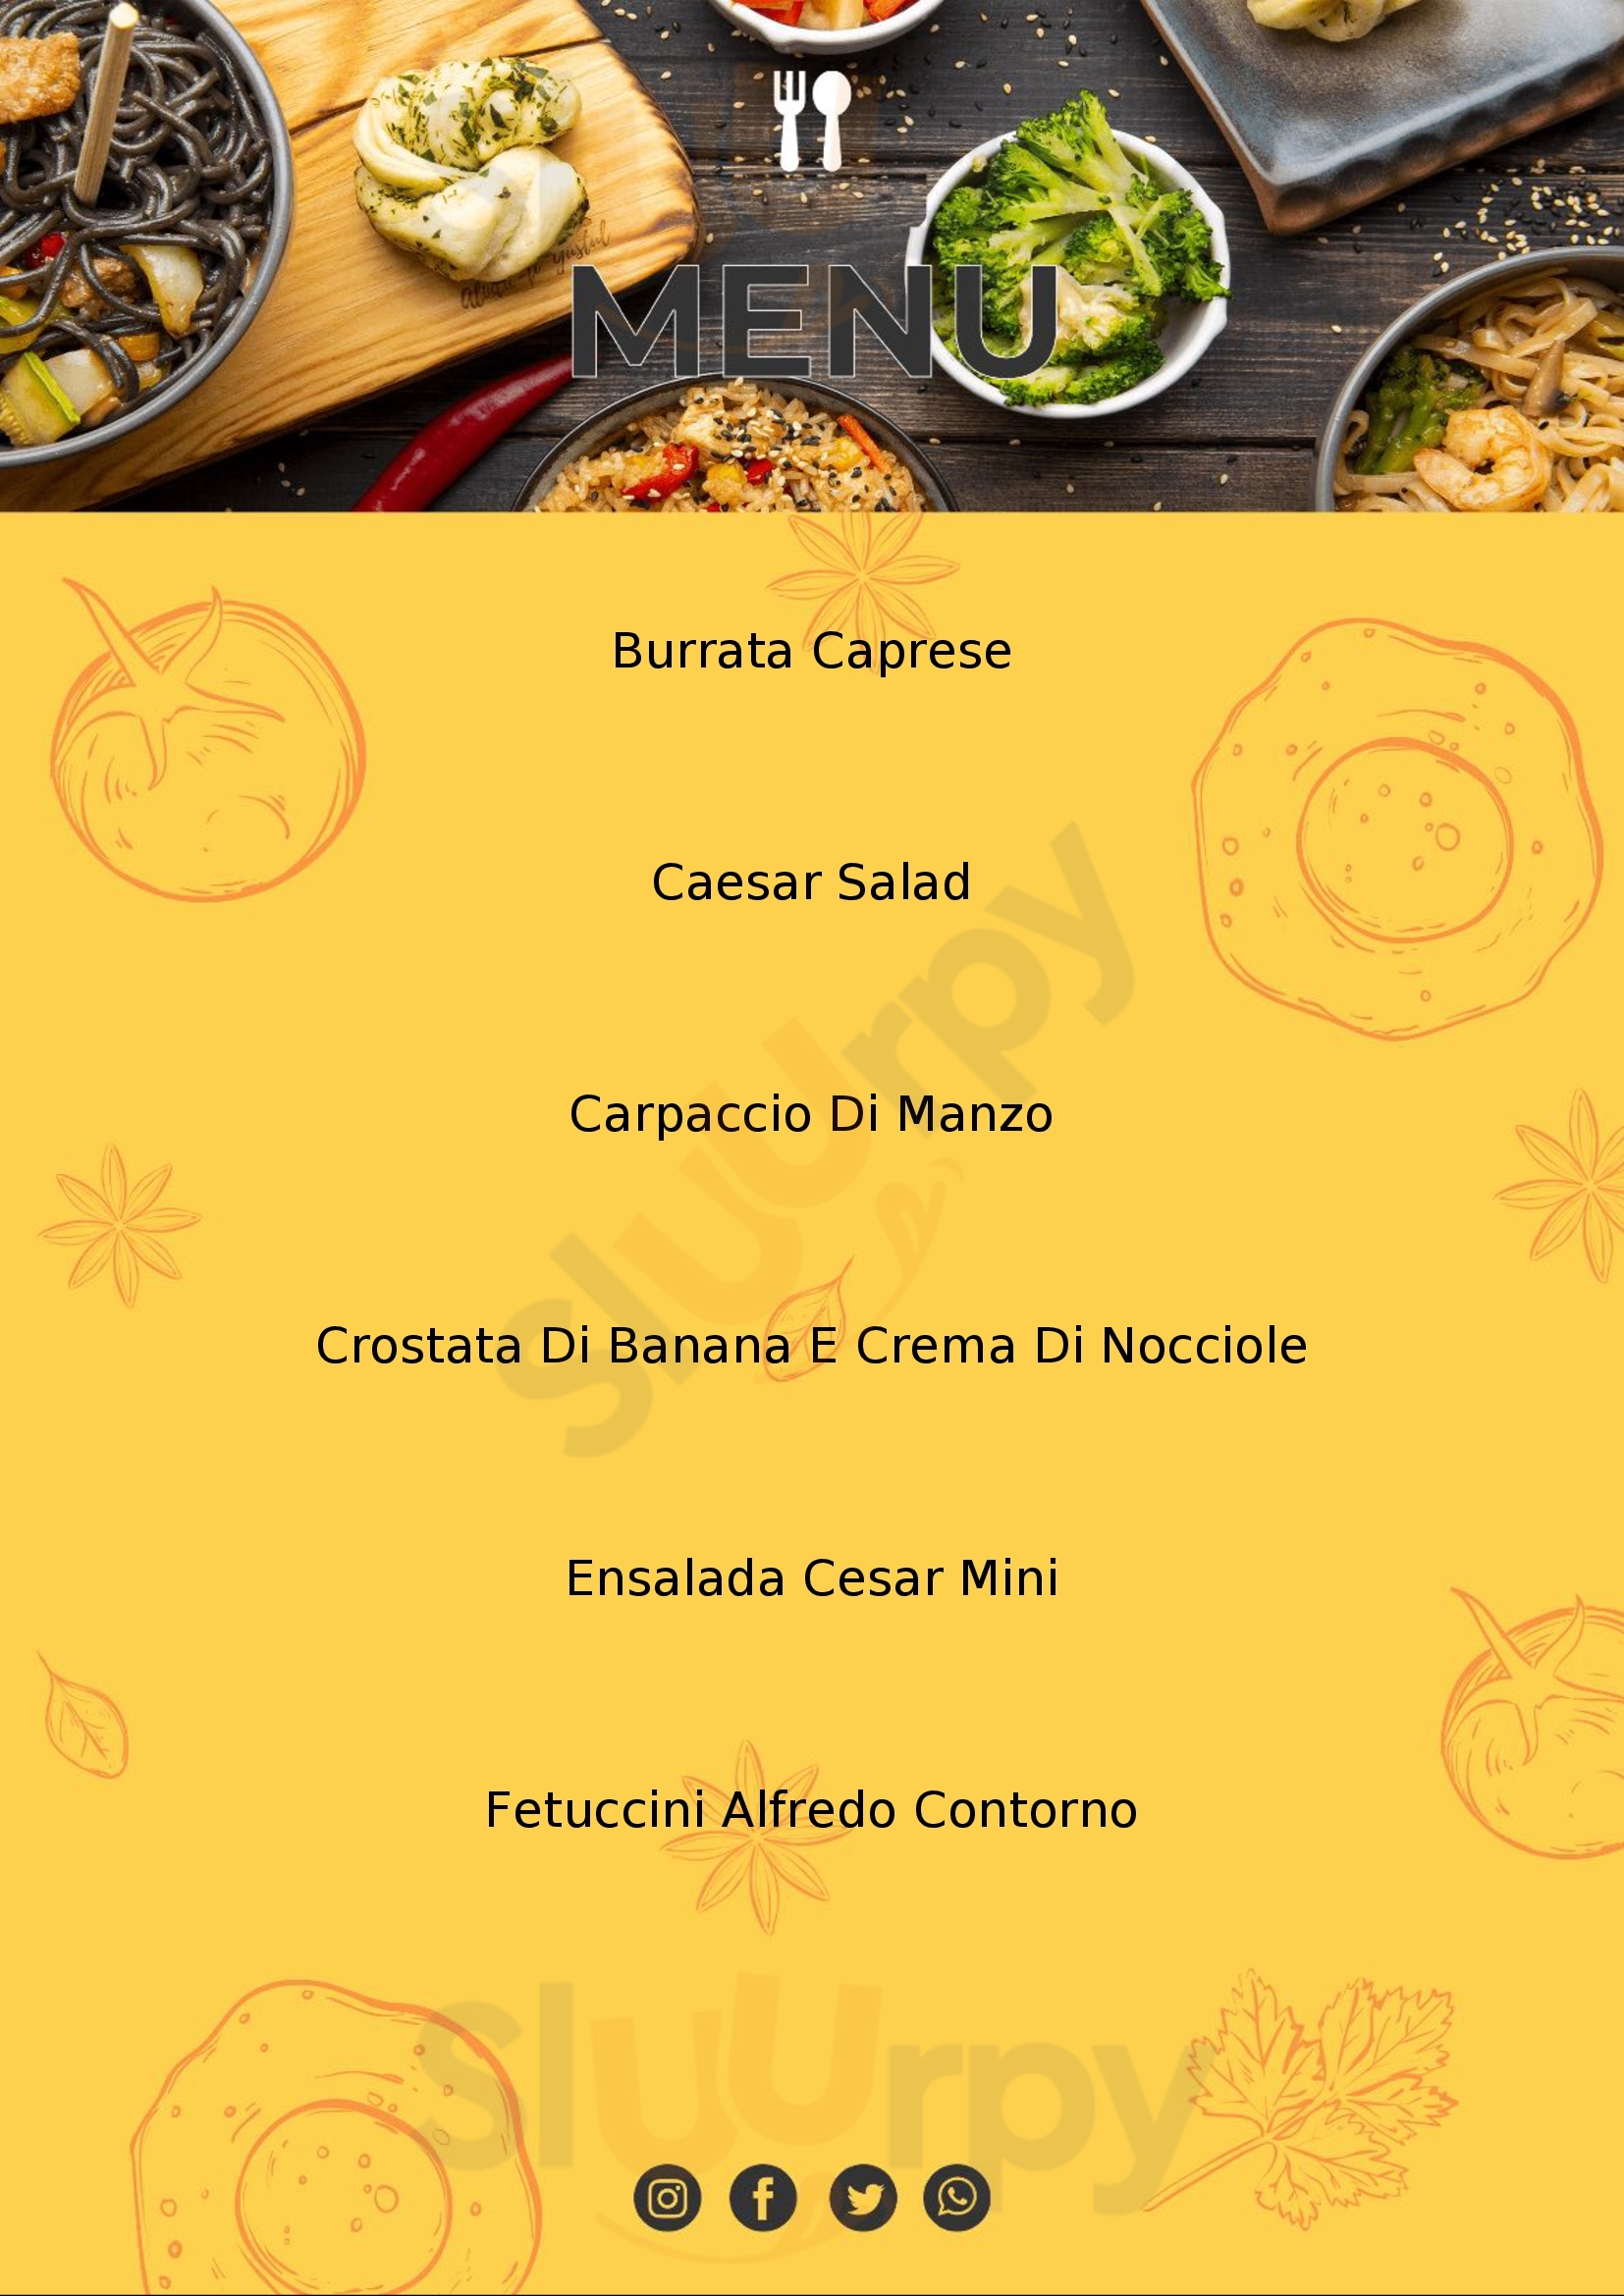 Abbraccio Cucina Italiana Puerto Vallarta Menu - 1